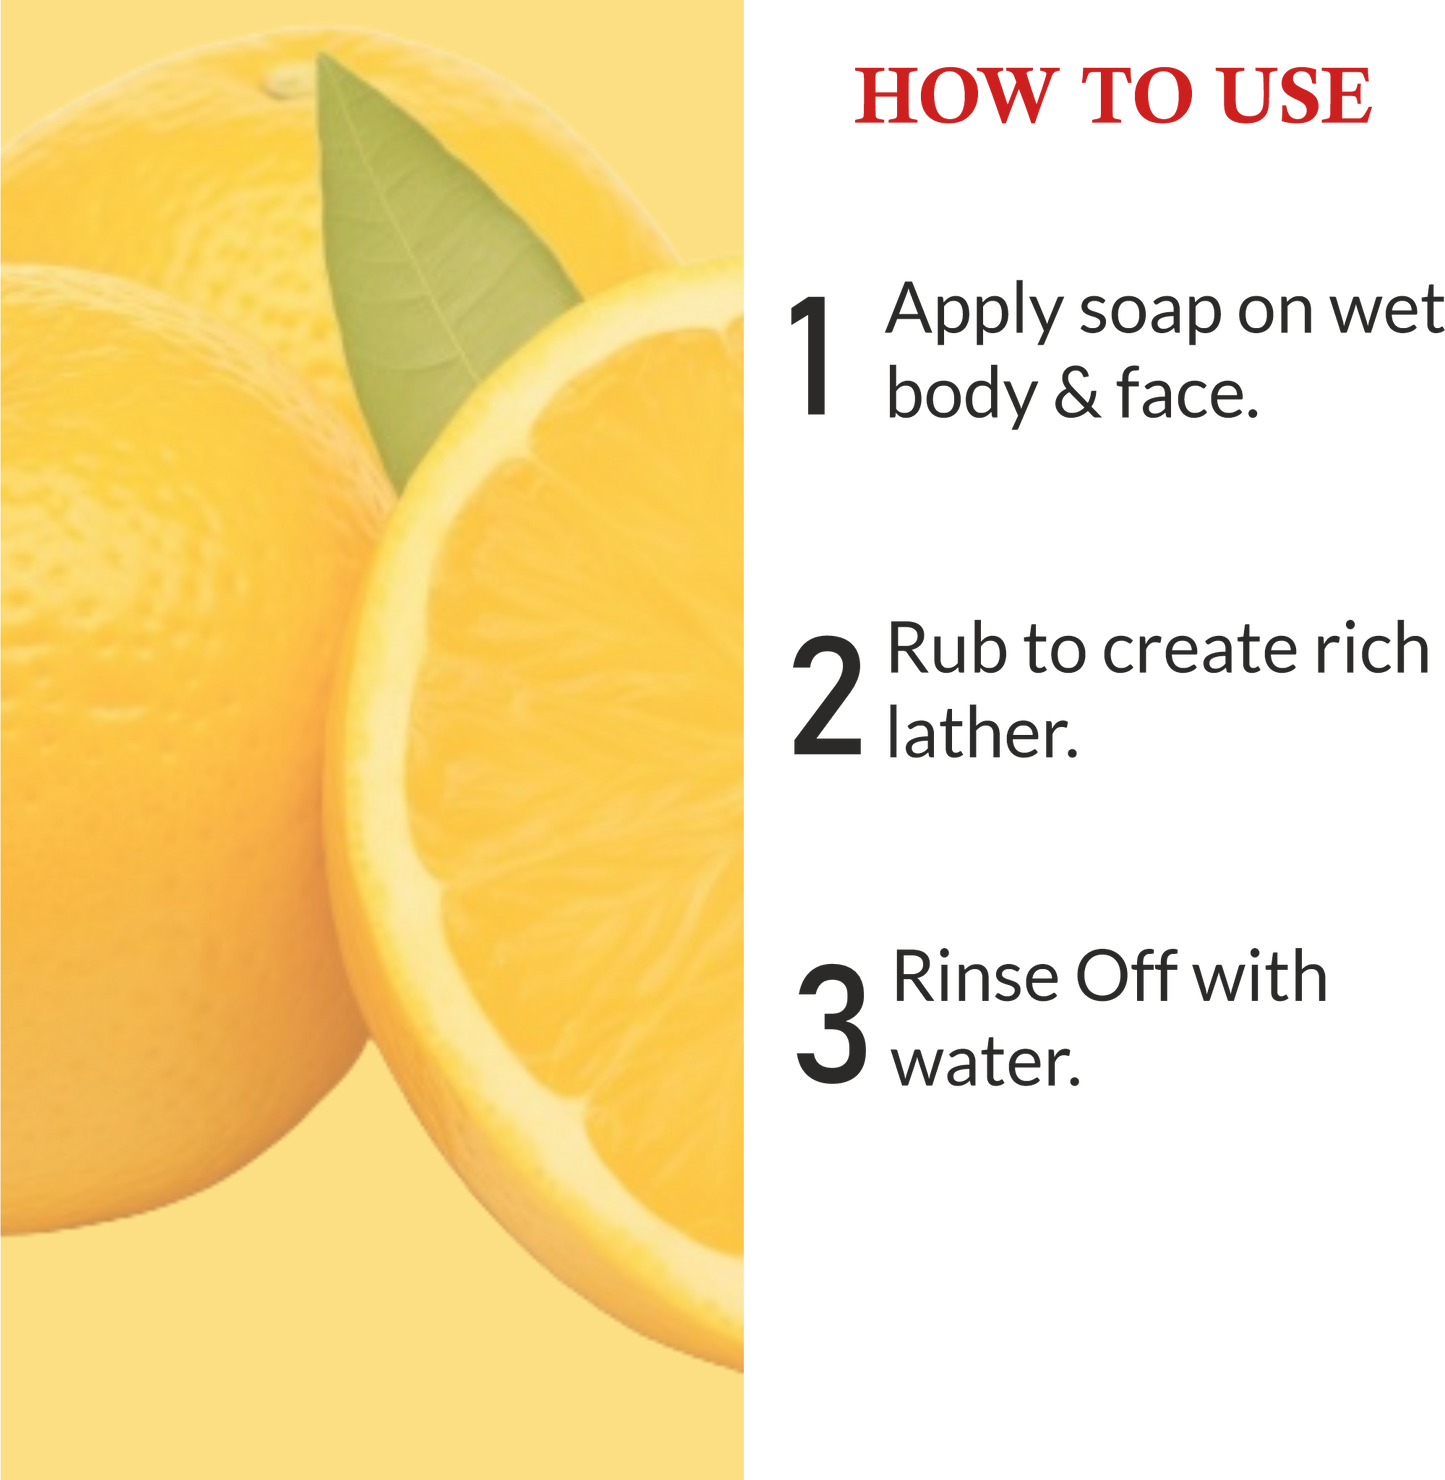 khadi orange soap